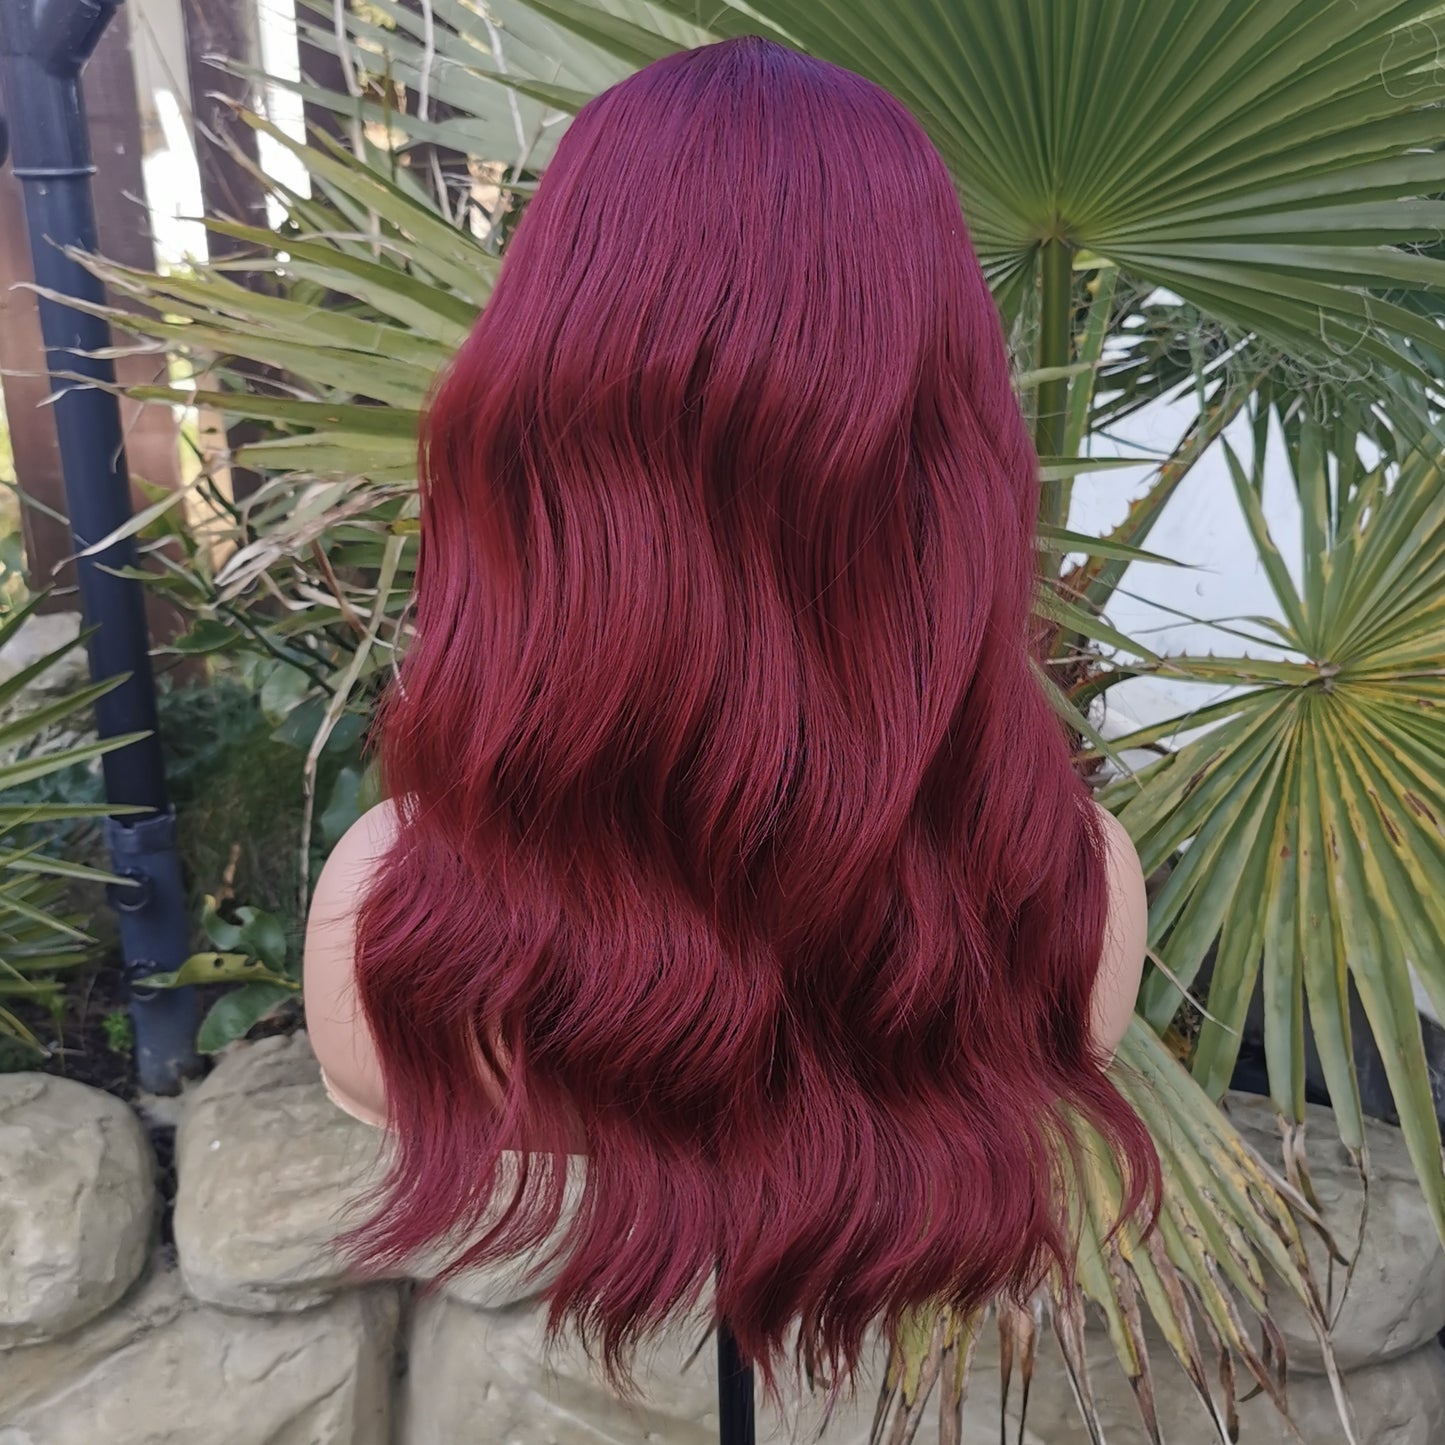 Fiesty Dark red long wavy synthetic wig.